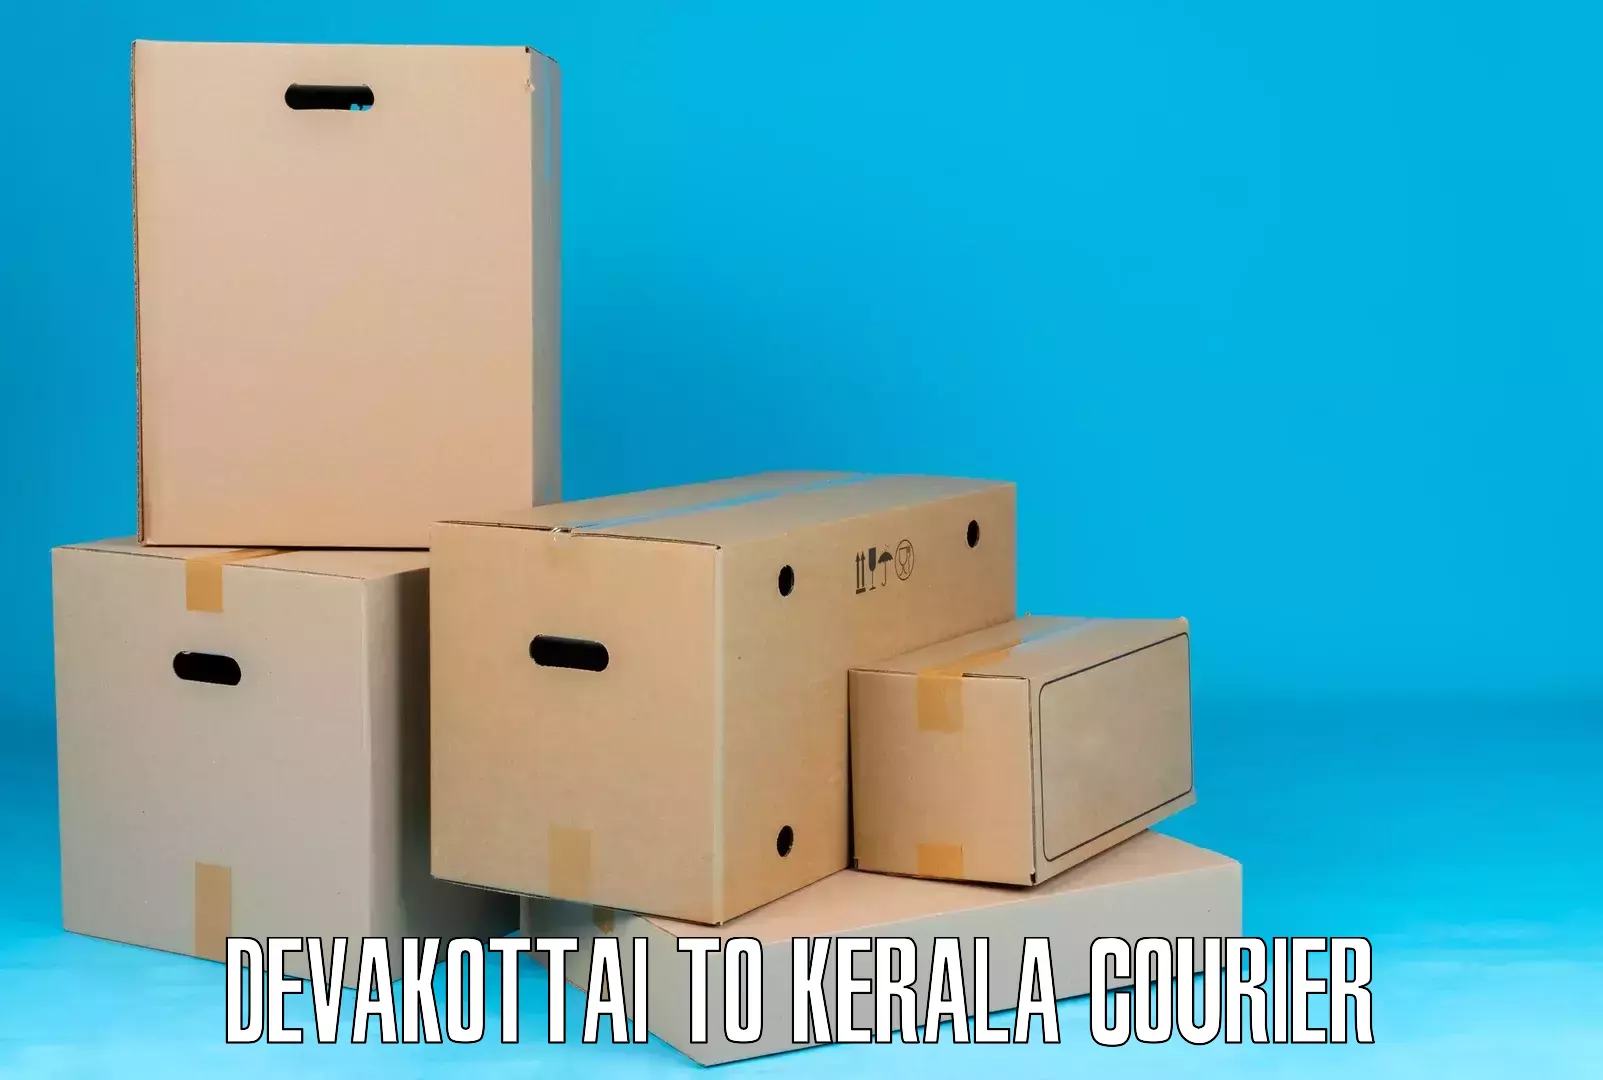 Delivery service partnership Devakottai to Kerala